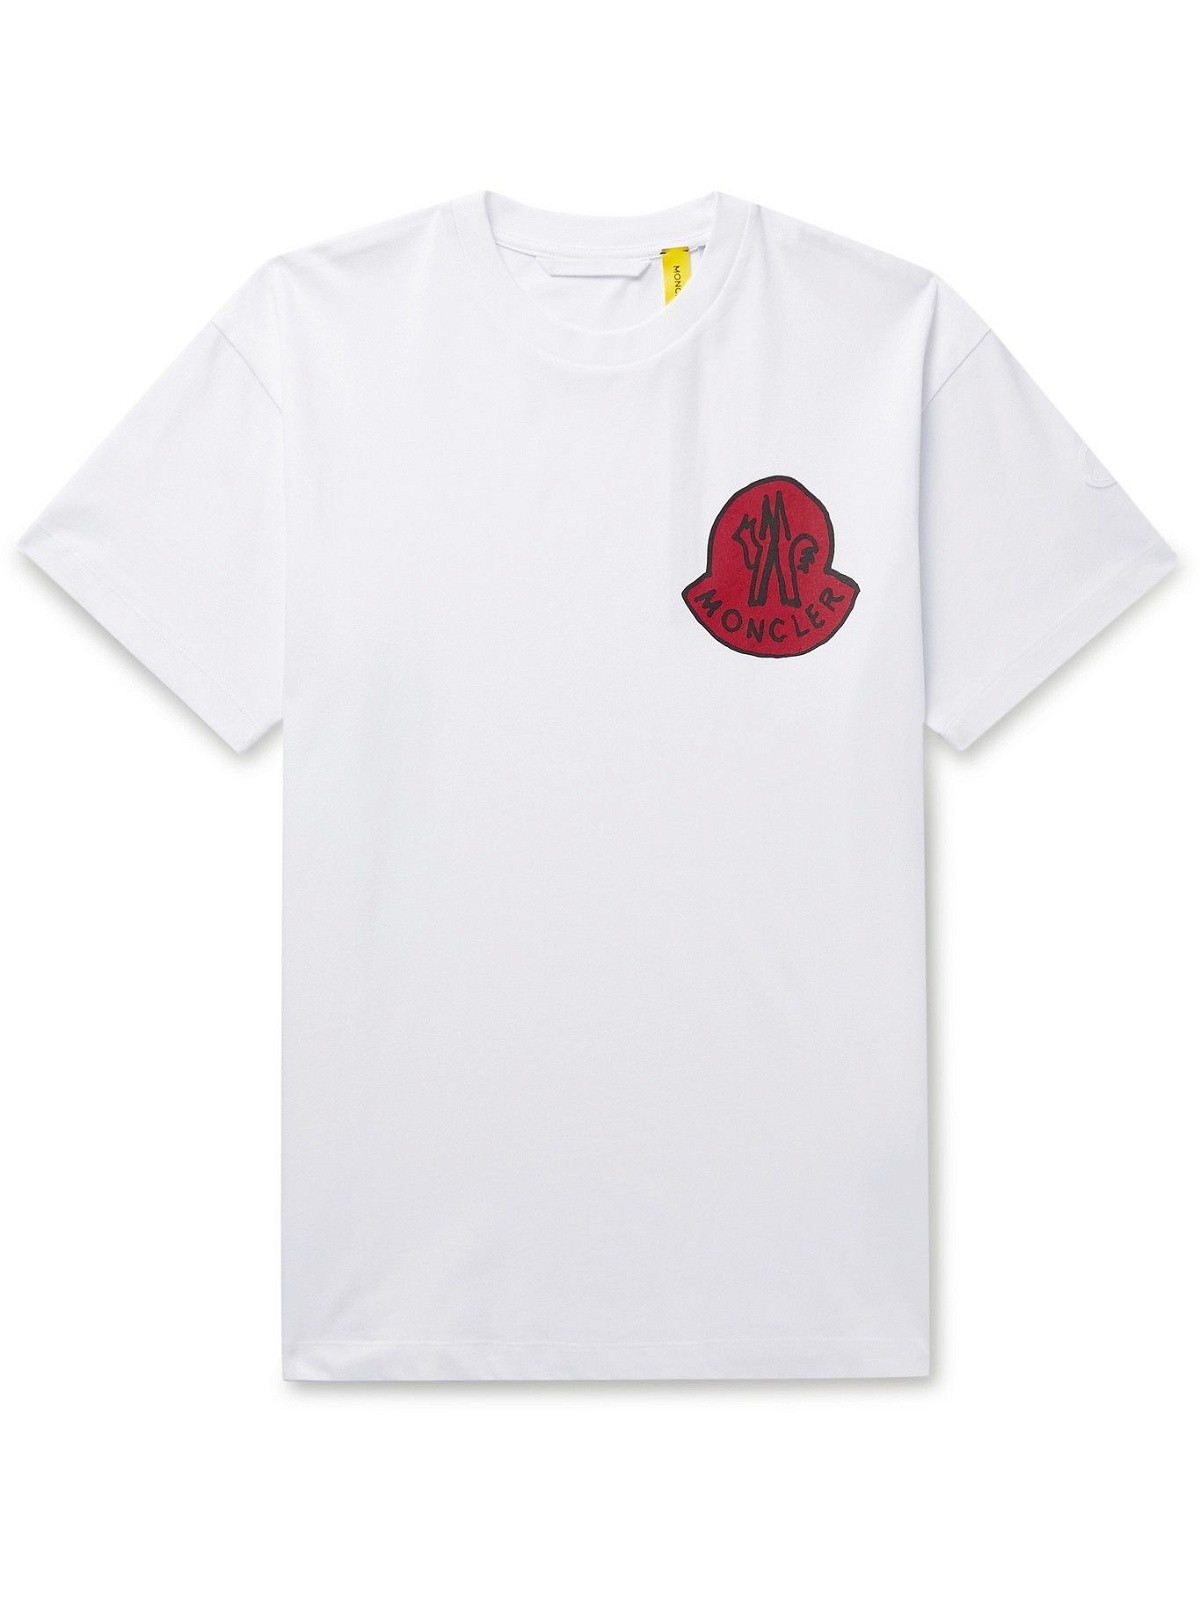 Moncler Genius - 2 Moncler 1952 Logo-Print Cotton-Jersey T-Shirt ...